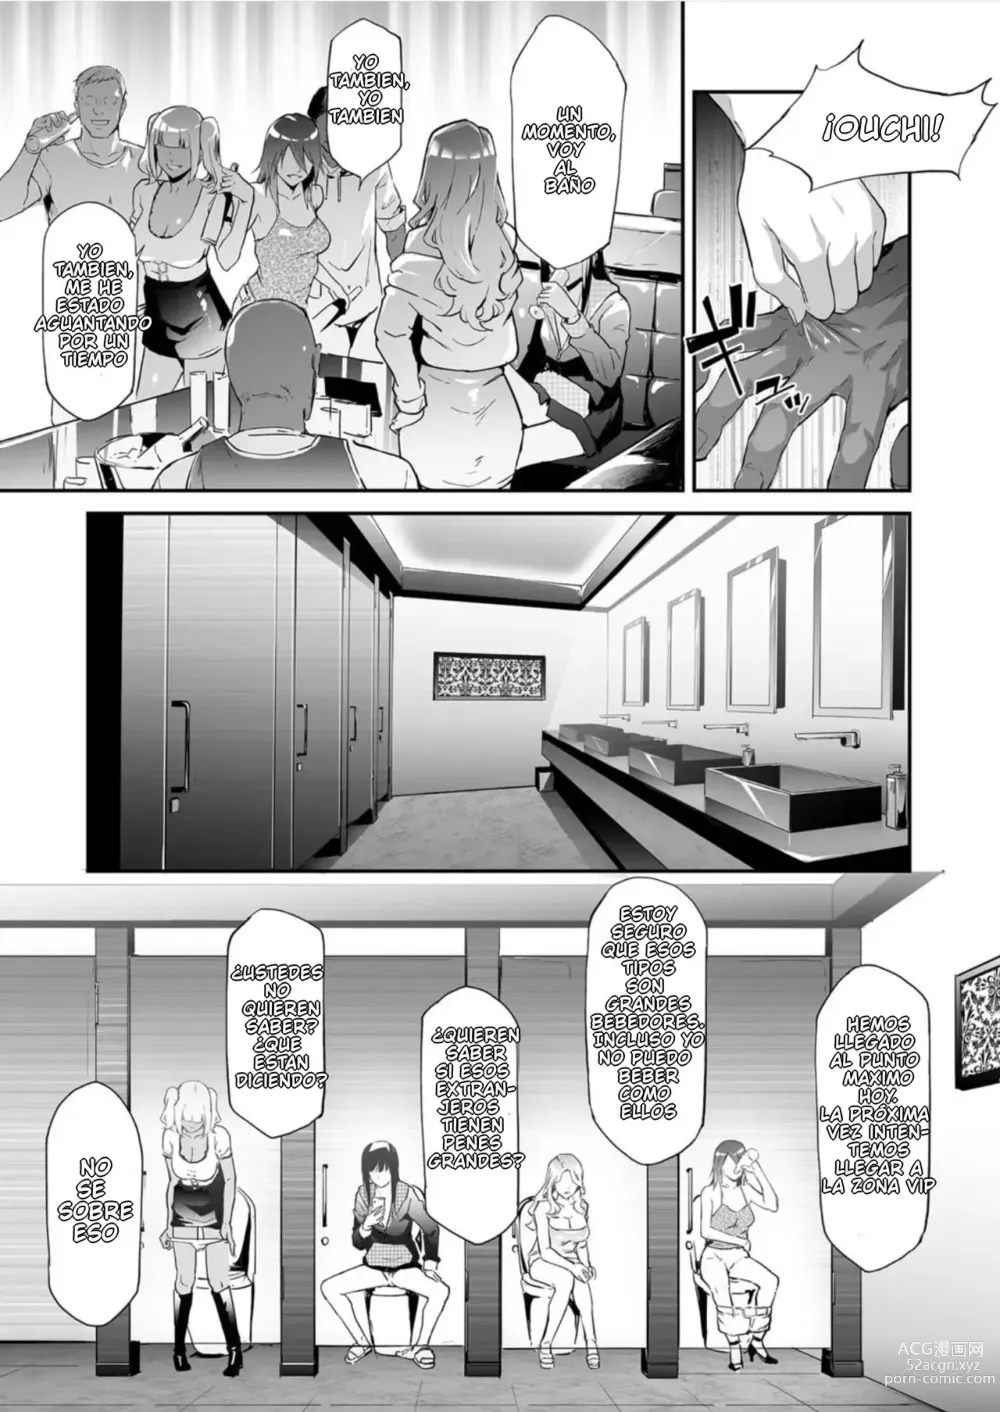 Page 5 of manga TS Revolution <Ch. 3>